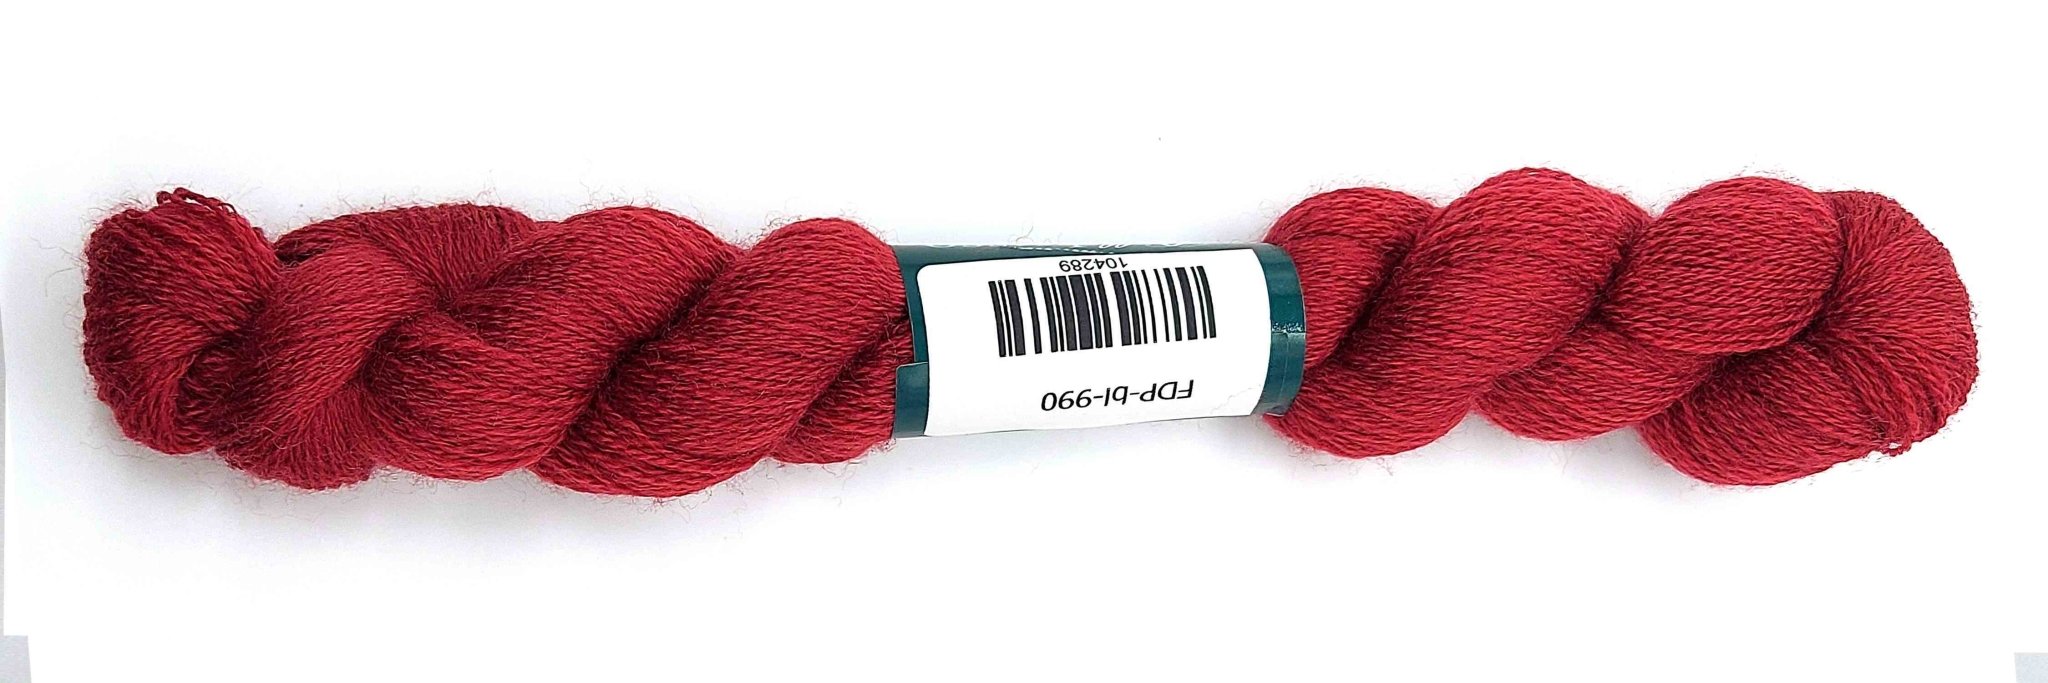 Bella Lusso Merino Wool 990 Cinnabar - The Flying Needles